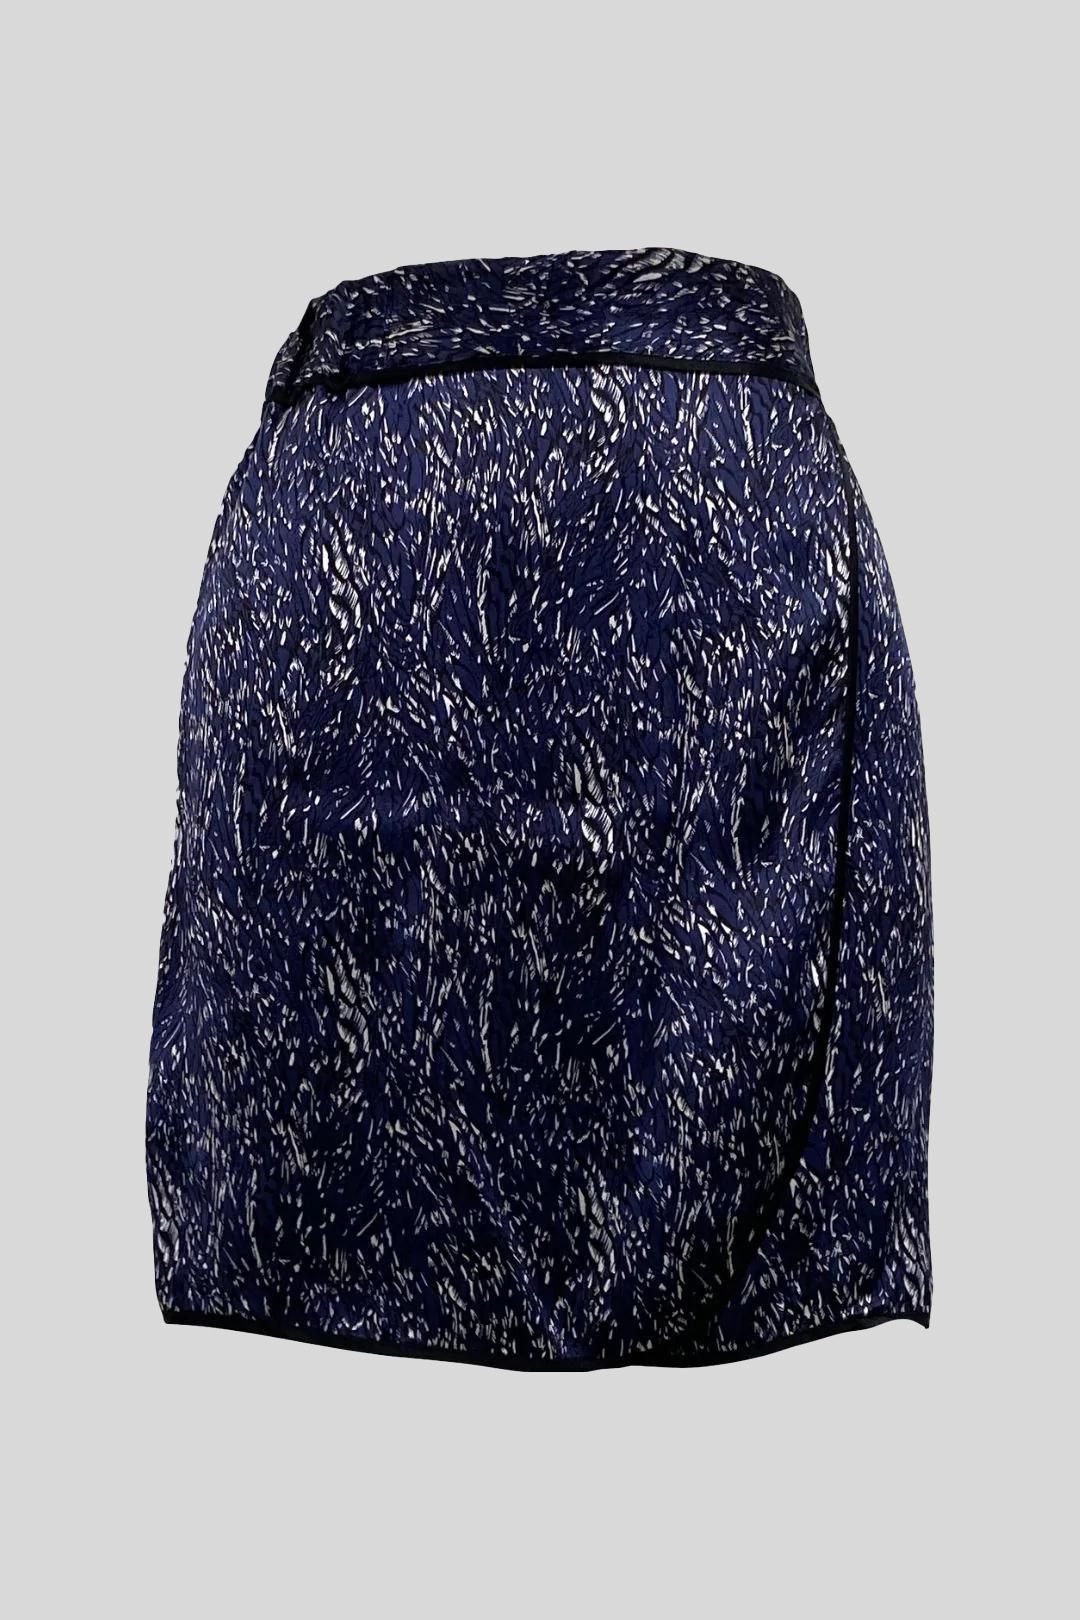 Comptoir des cotonniers - Rabriel Print Blue Mini Skirt